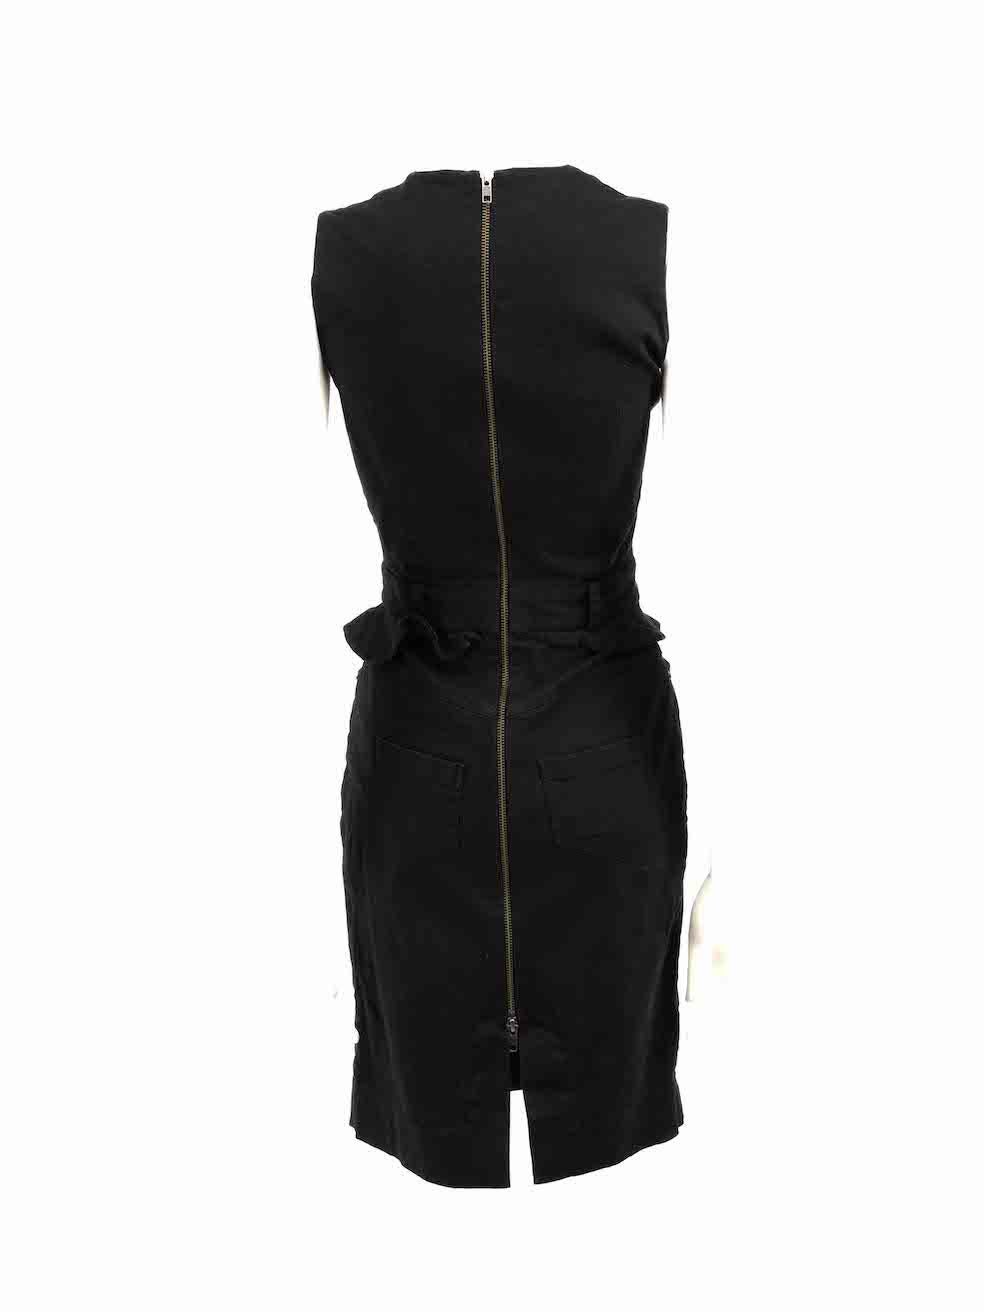 Preen By Thornton Bregazzi Black Ruffle Mini Dress Size S In Good Condition For Sale In London, GB